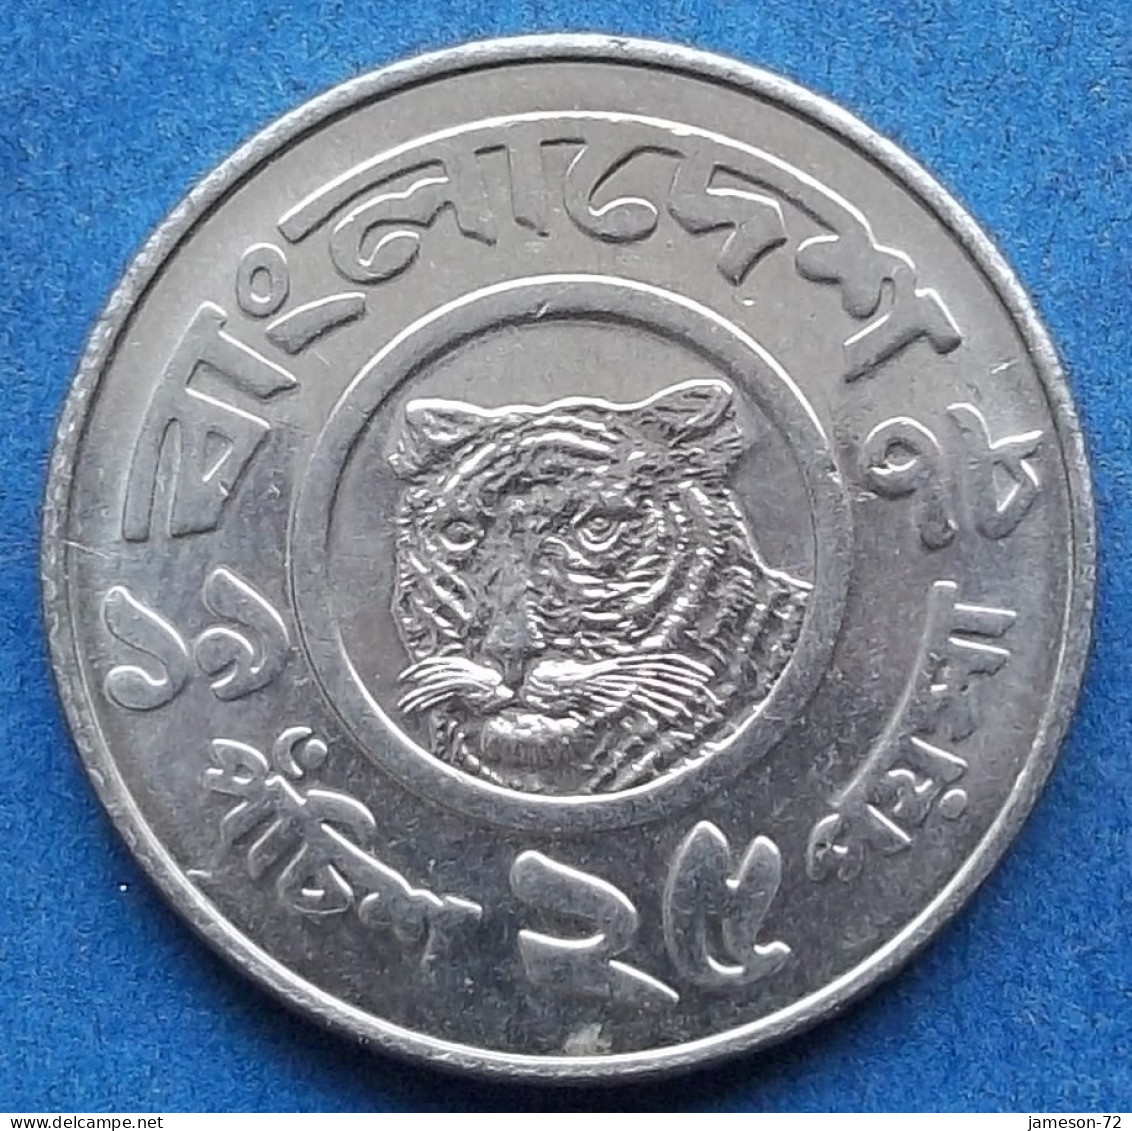 BANGLADESH - 25 Poisha 1978 "Tiger" KM# 12 Independent Peoples Republic (1971) - Edelweiss Coins - Bangladesh